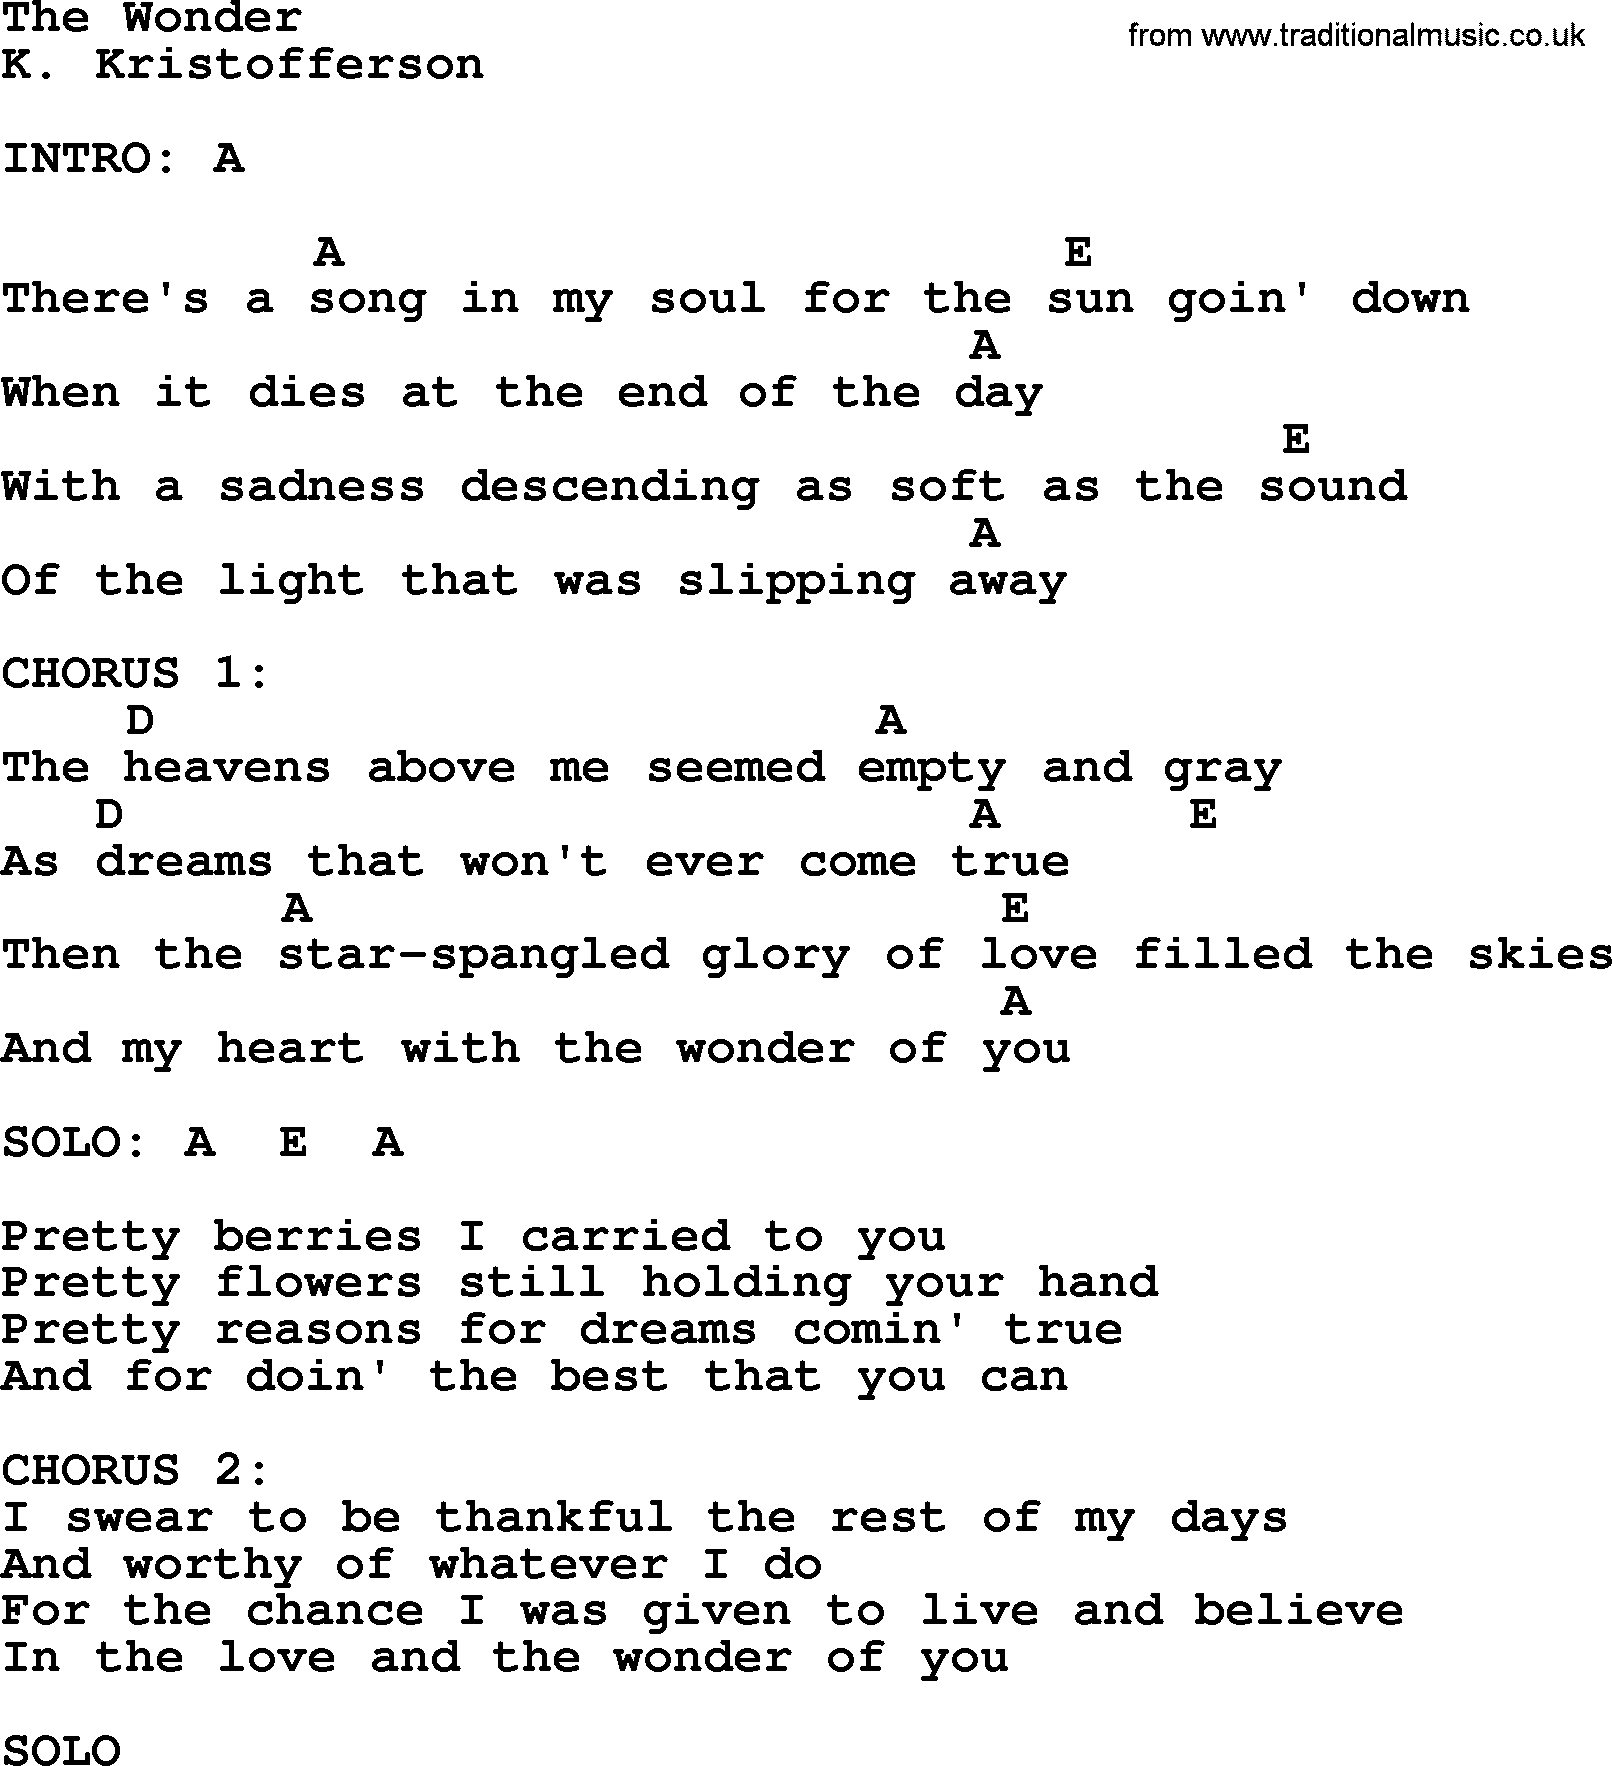 Kris Kristofferson song: The Wonder lyrics and chords